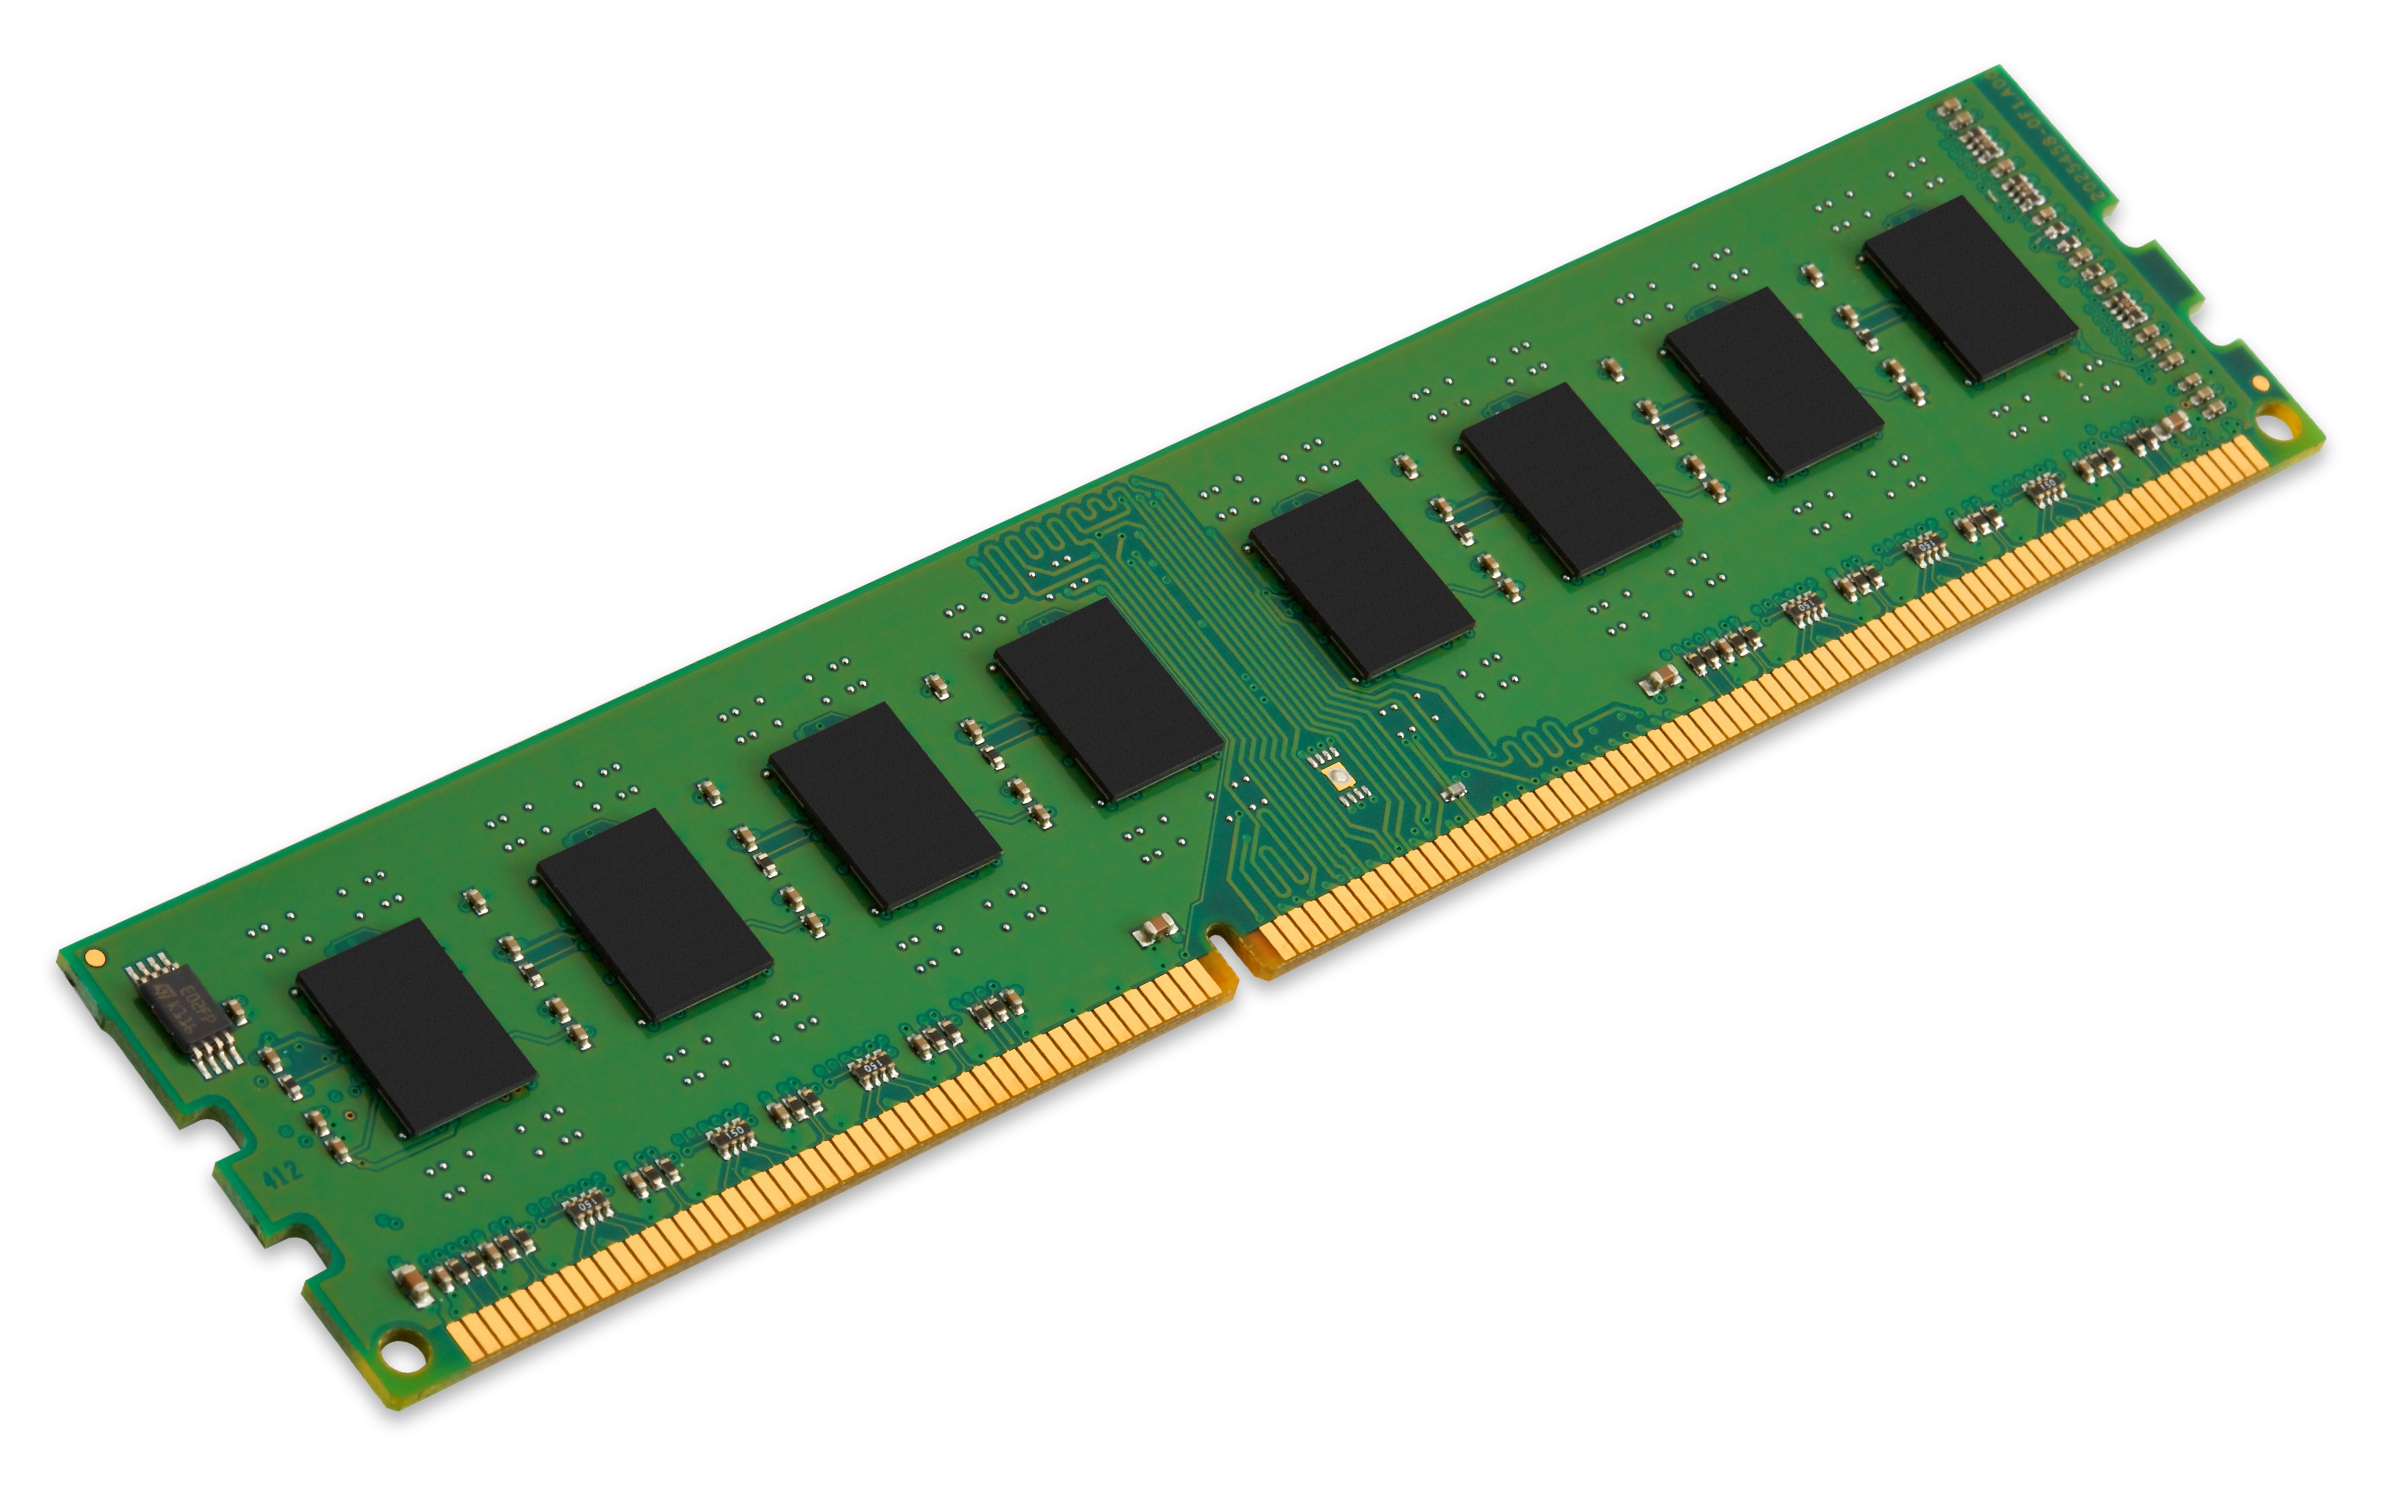 Kingston Technology 16GB(2 x 8GB) DDR3-1600